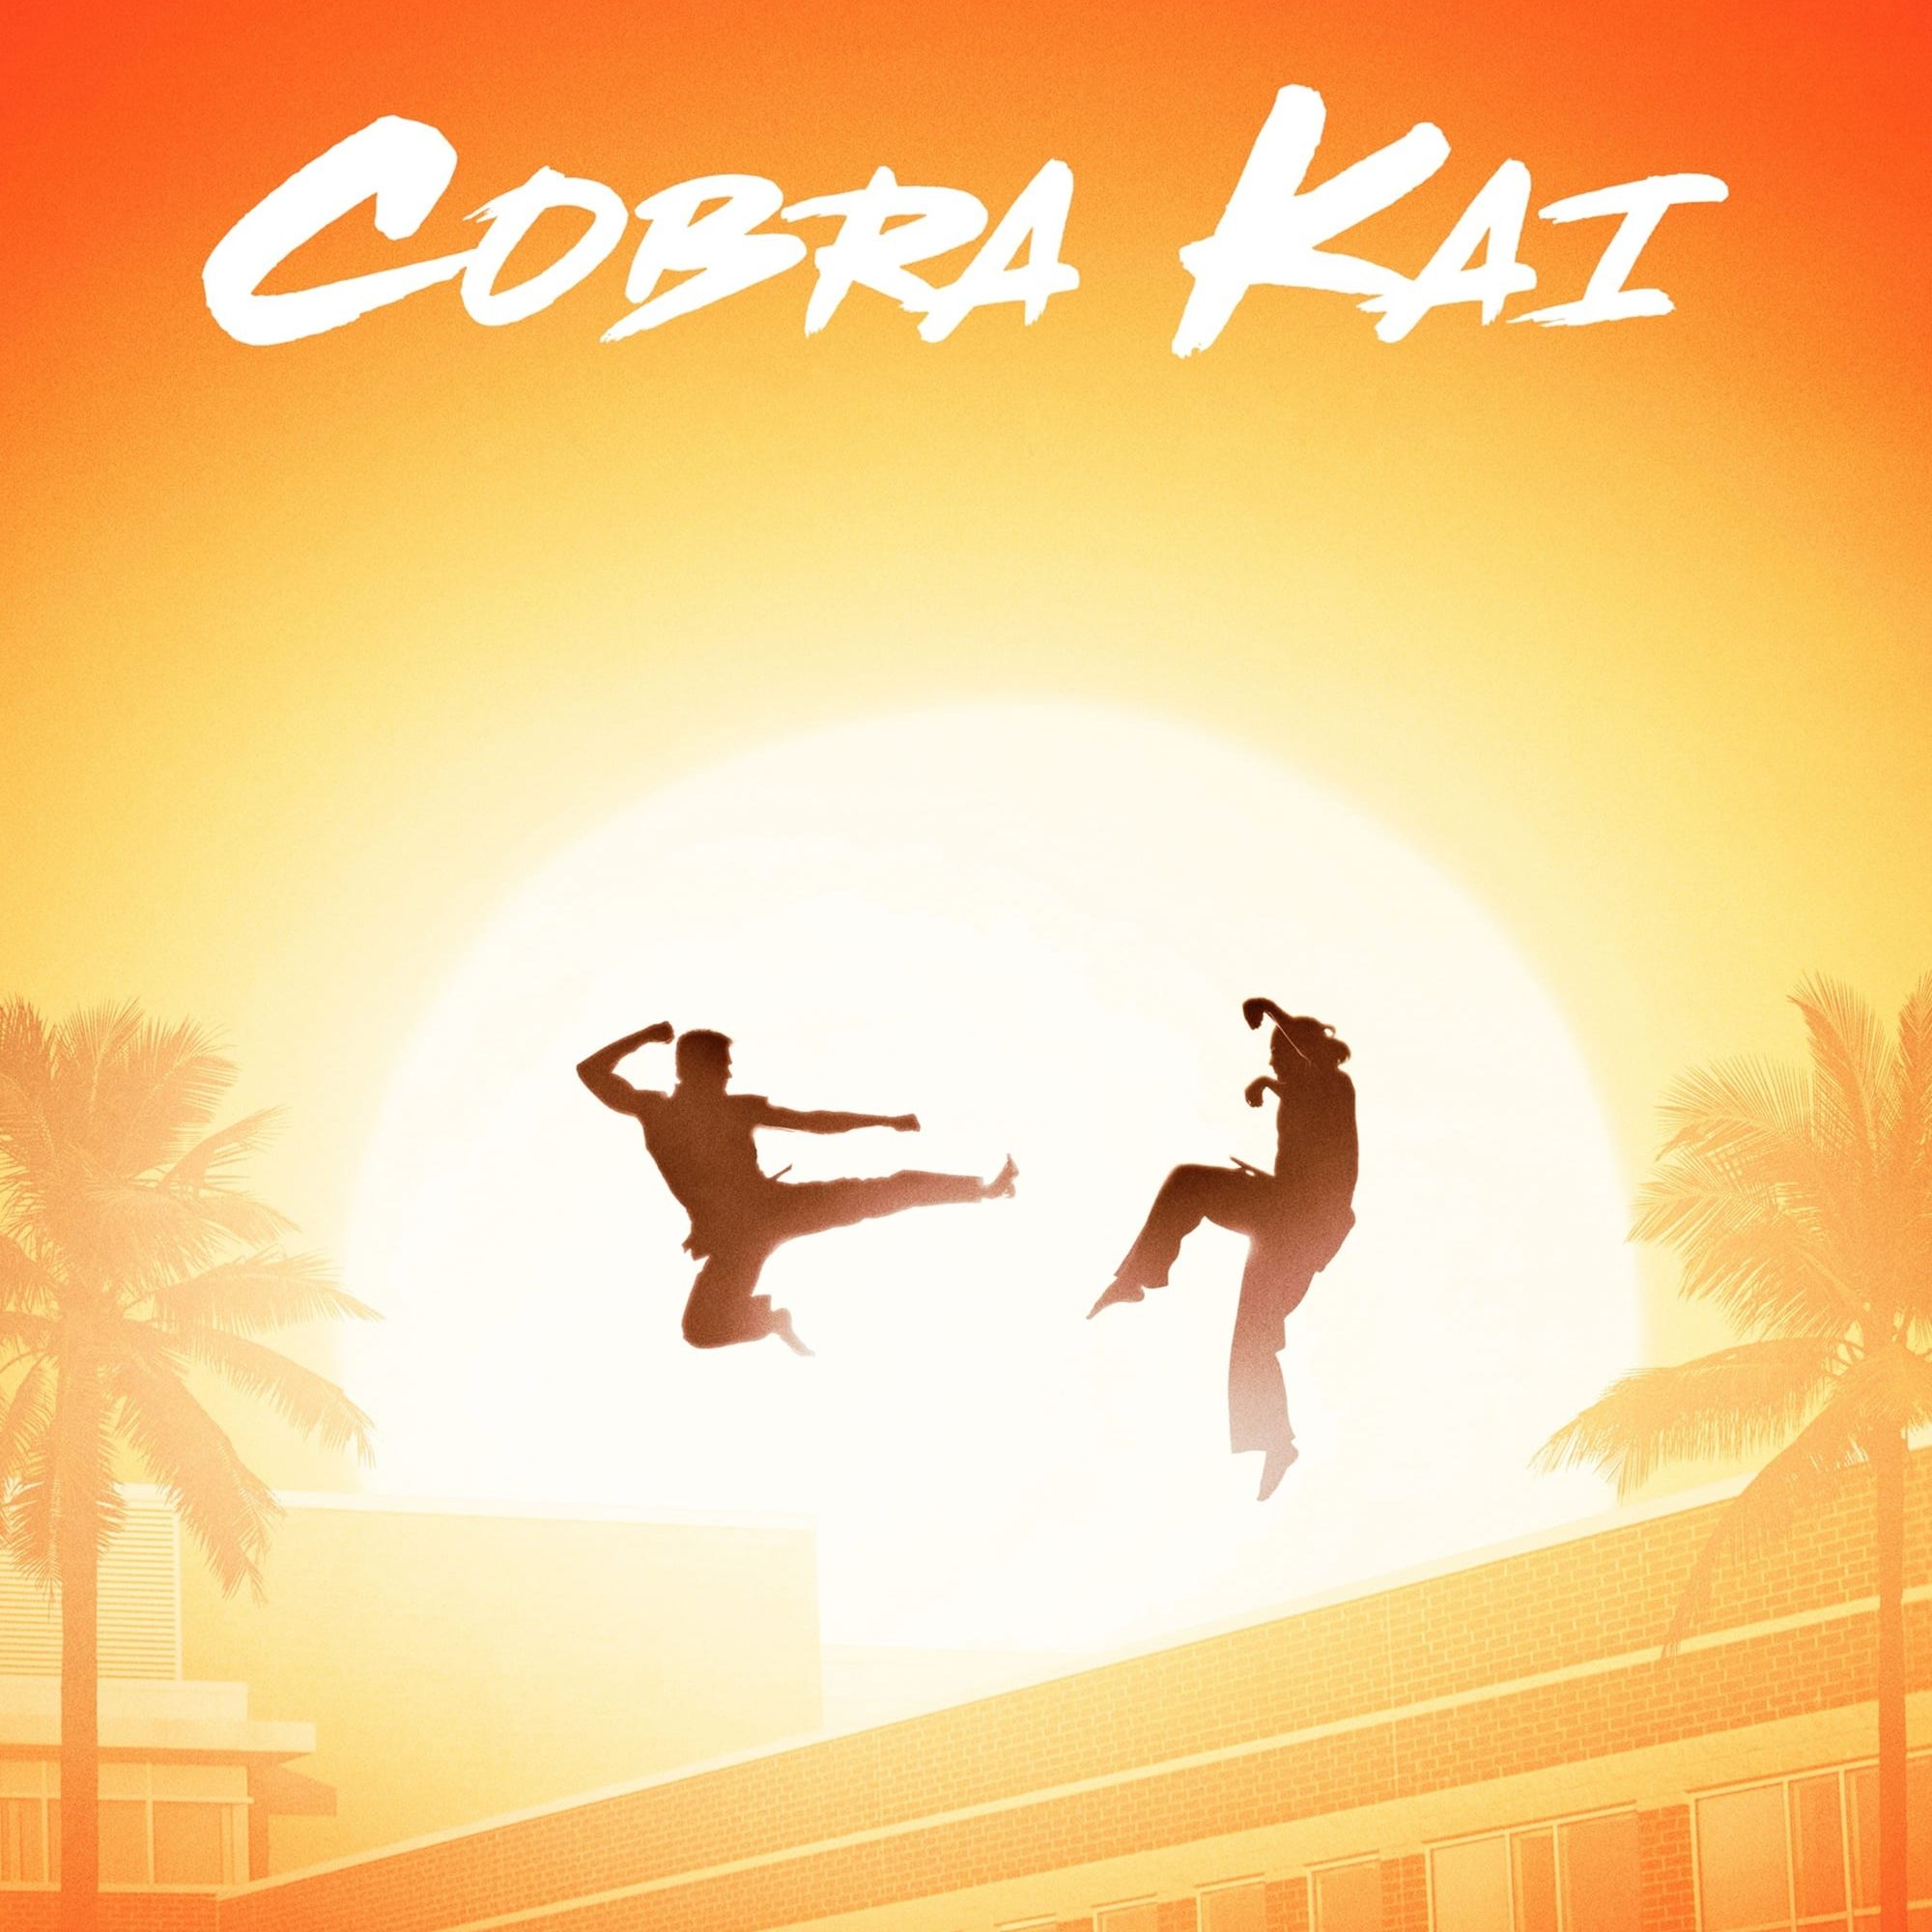 New Cobra Kai Projects in Development Despite the Series' Cancellation